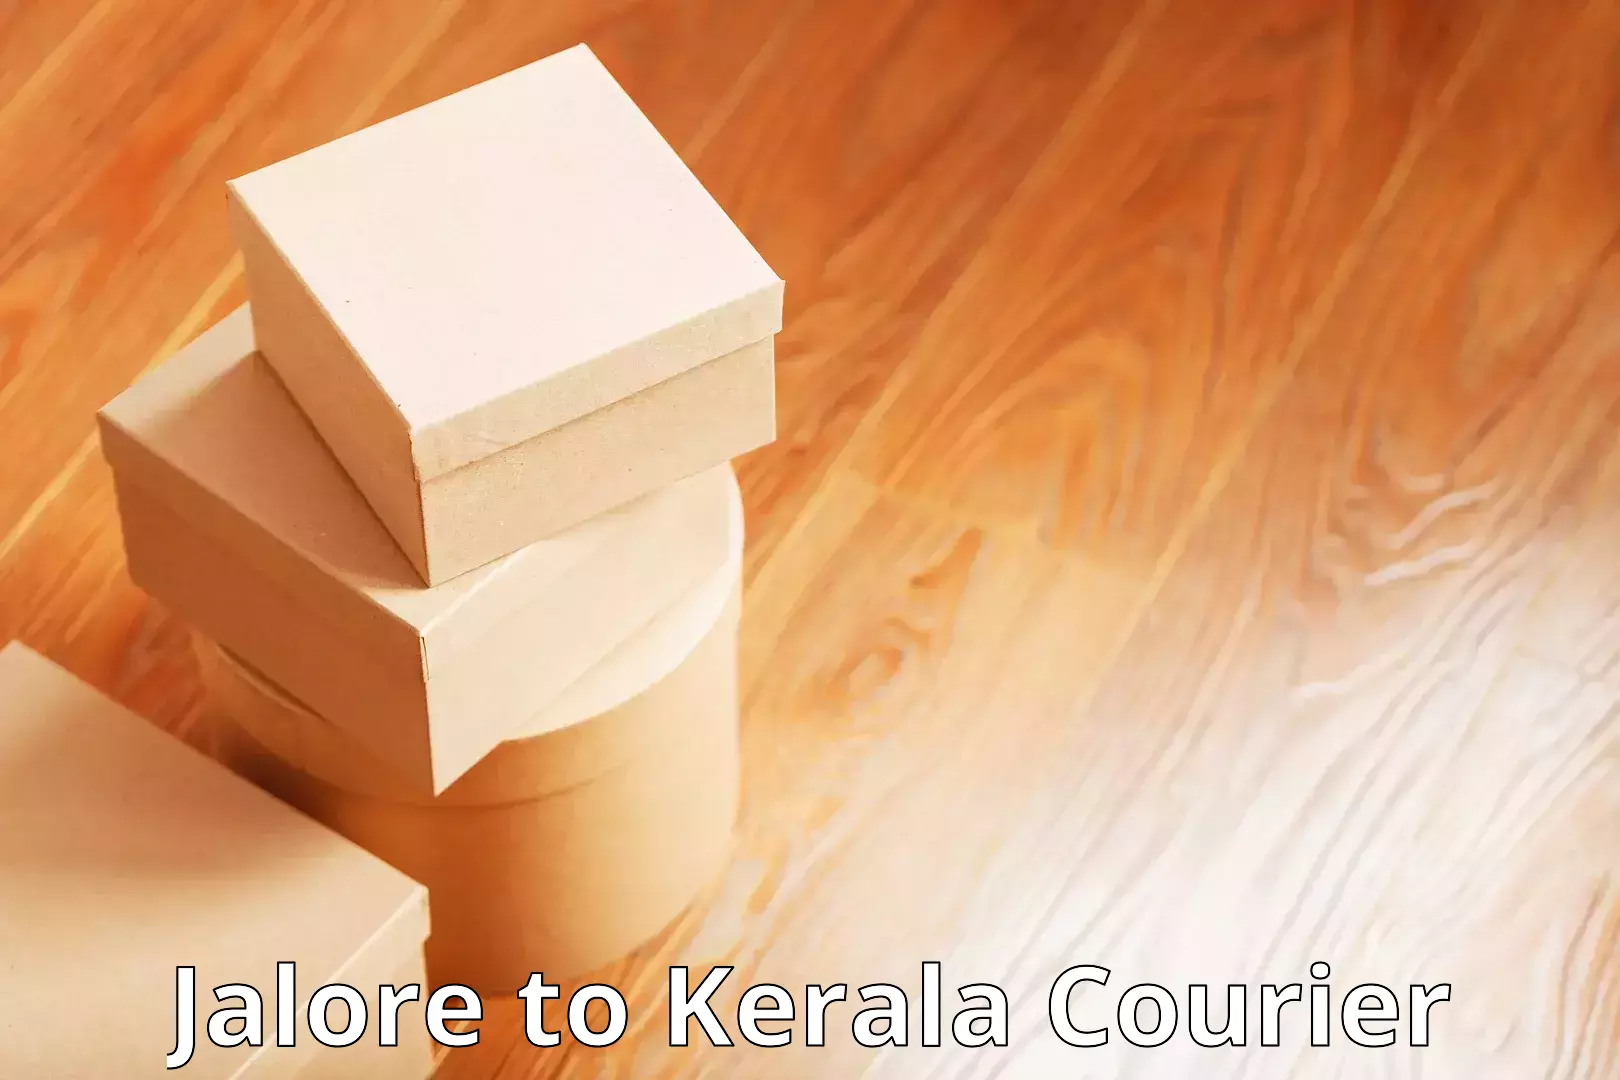 Next-generation courier services Jalore to Kochi